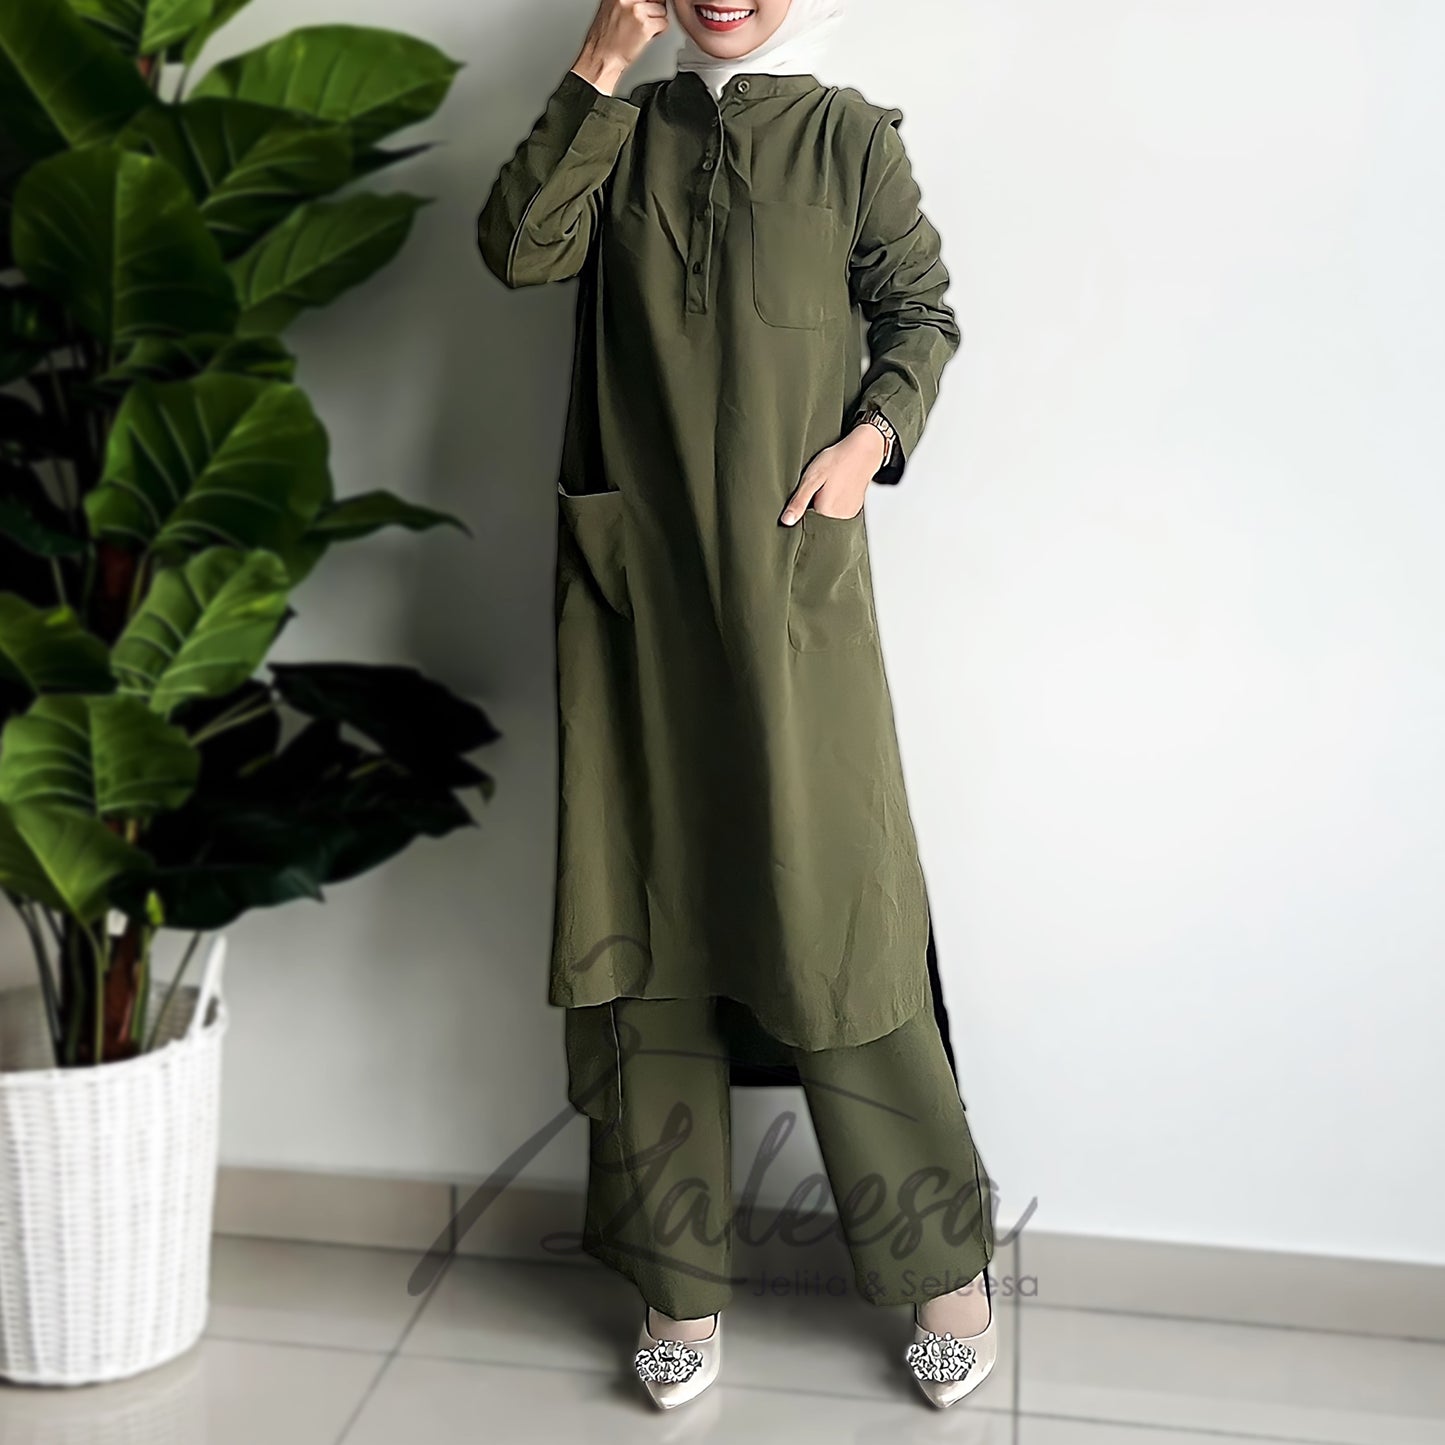 LALEESA (Blouse + Pants) SET DANISH SW837817 <BF Friendly Series> Set Wear Blouse Muslimah Plus Size Baju Raya 2024